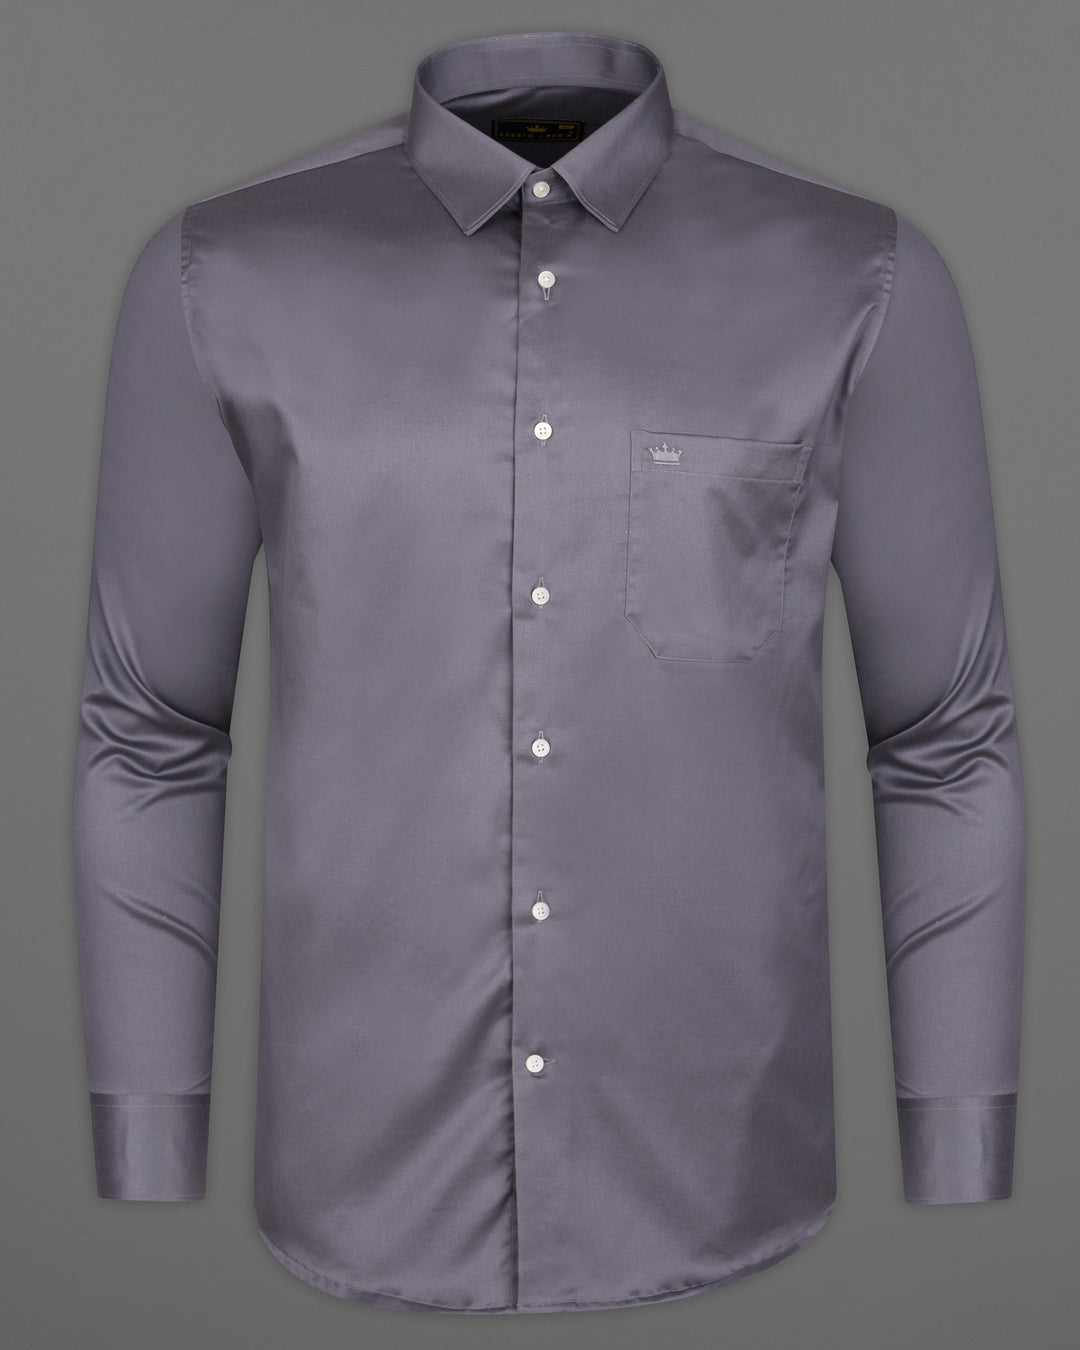 What's your opinion on the grey slacks / black shirt combo? :  r/malefashionadvice